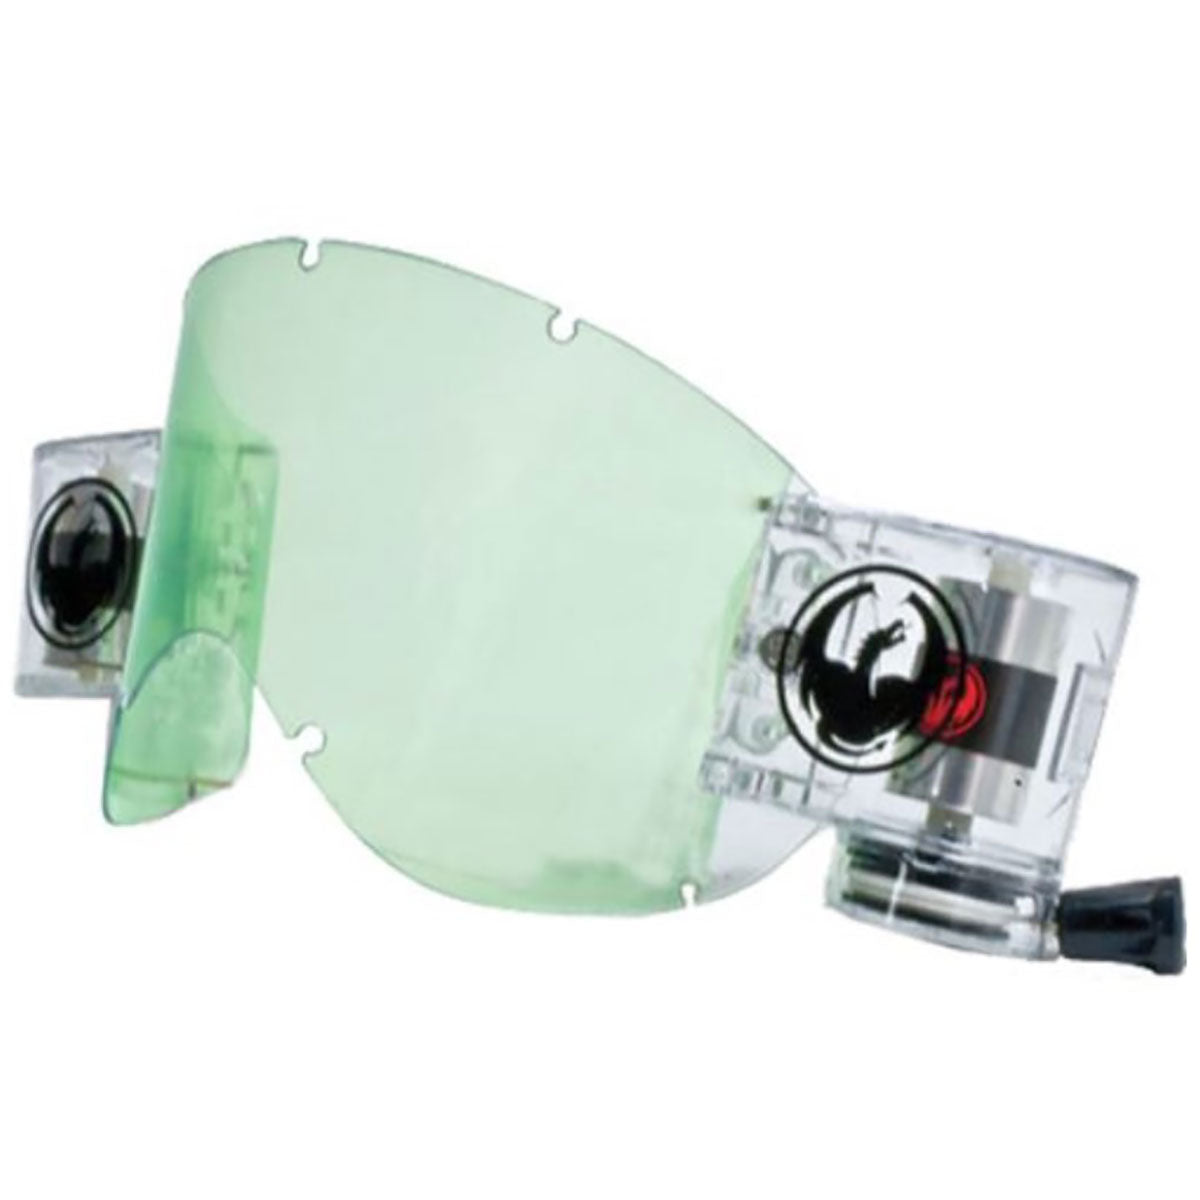 Dragon Alliance MDX Rapid Roll Film System Goggle Accessories-722-1115